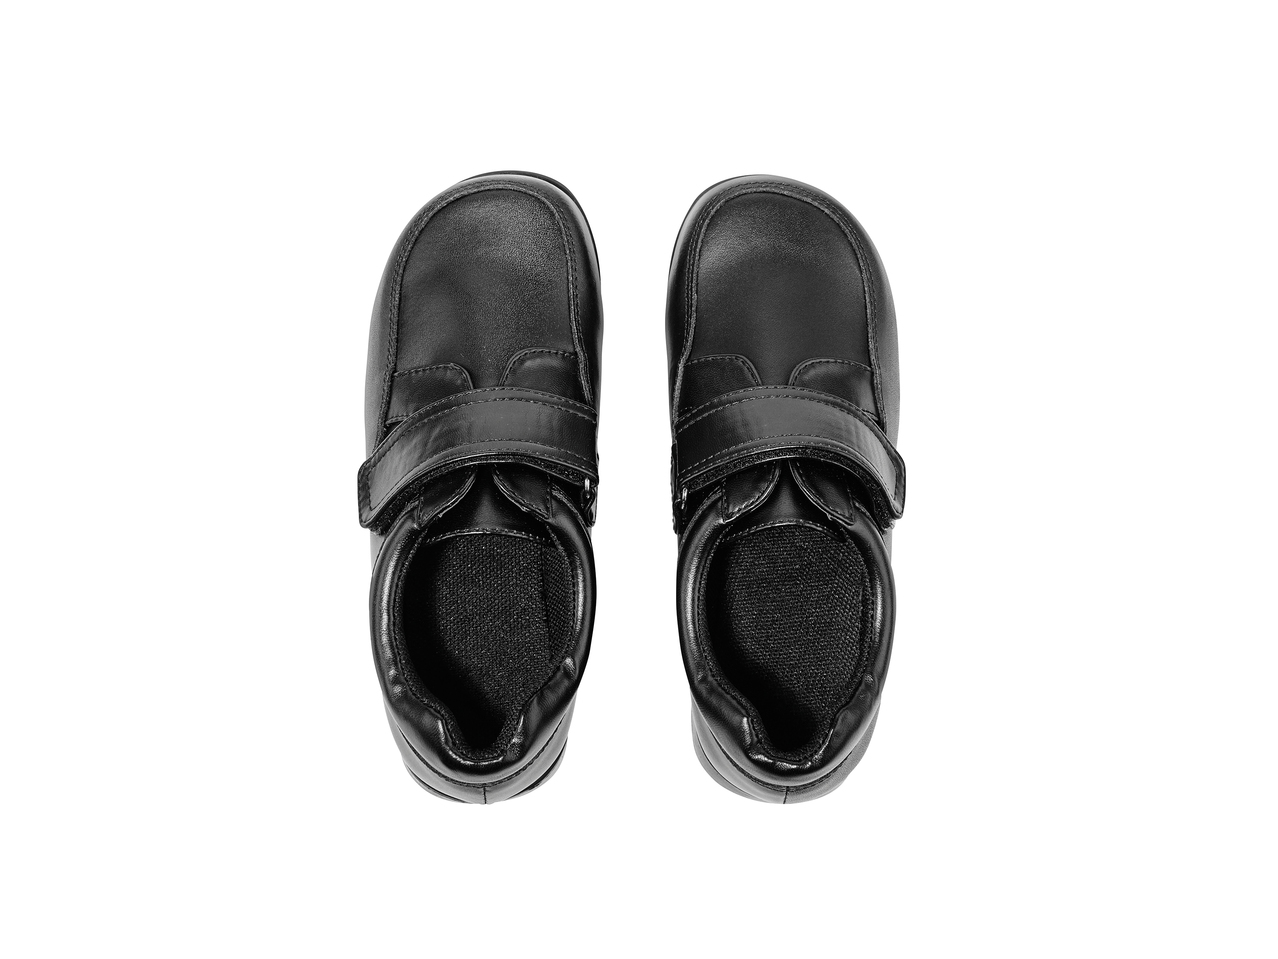 Smart Start Boys' Leather School Shoes1